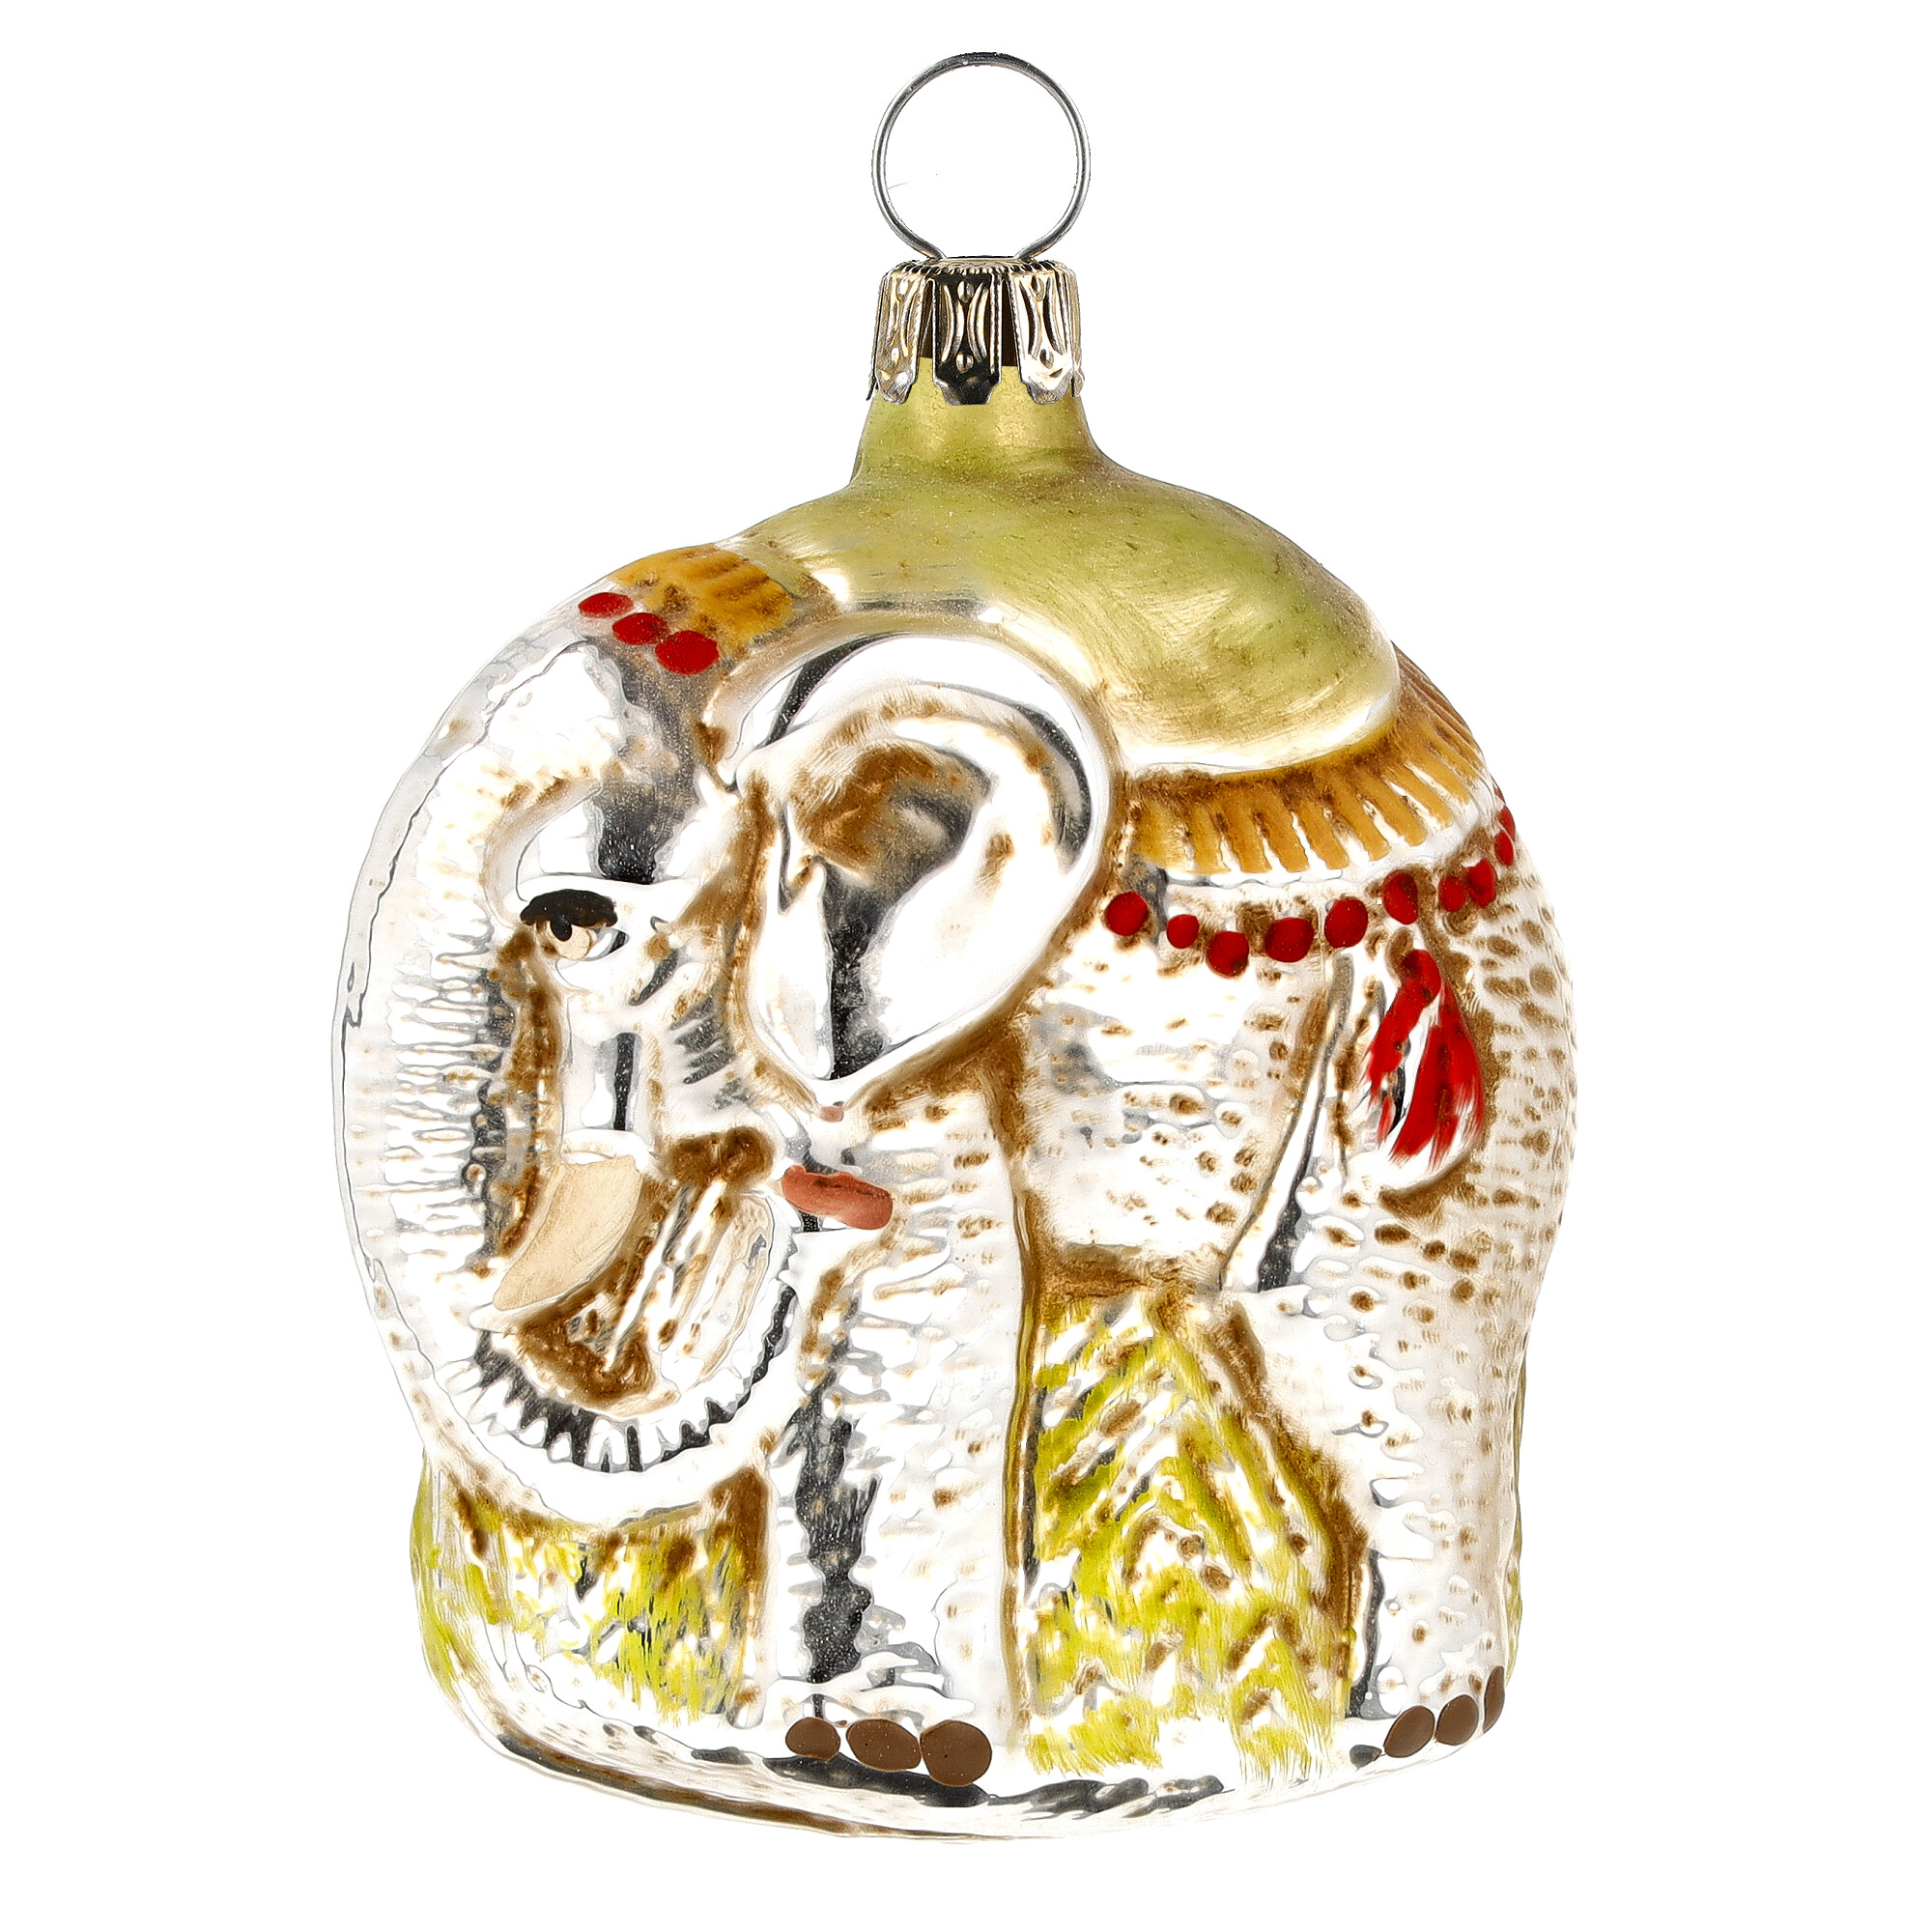 Retro Vintage style Christmas Glass Ornament - Elephant